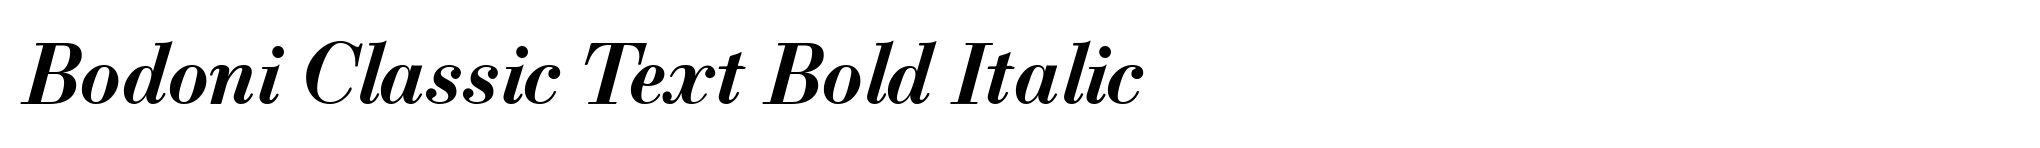 Bodoni Classic Text Bold Italic image